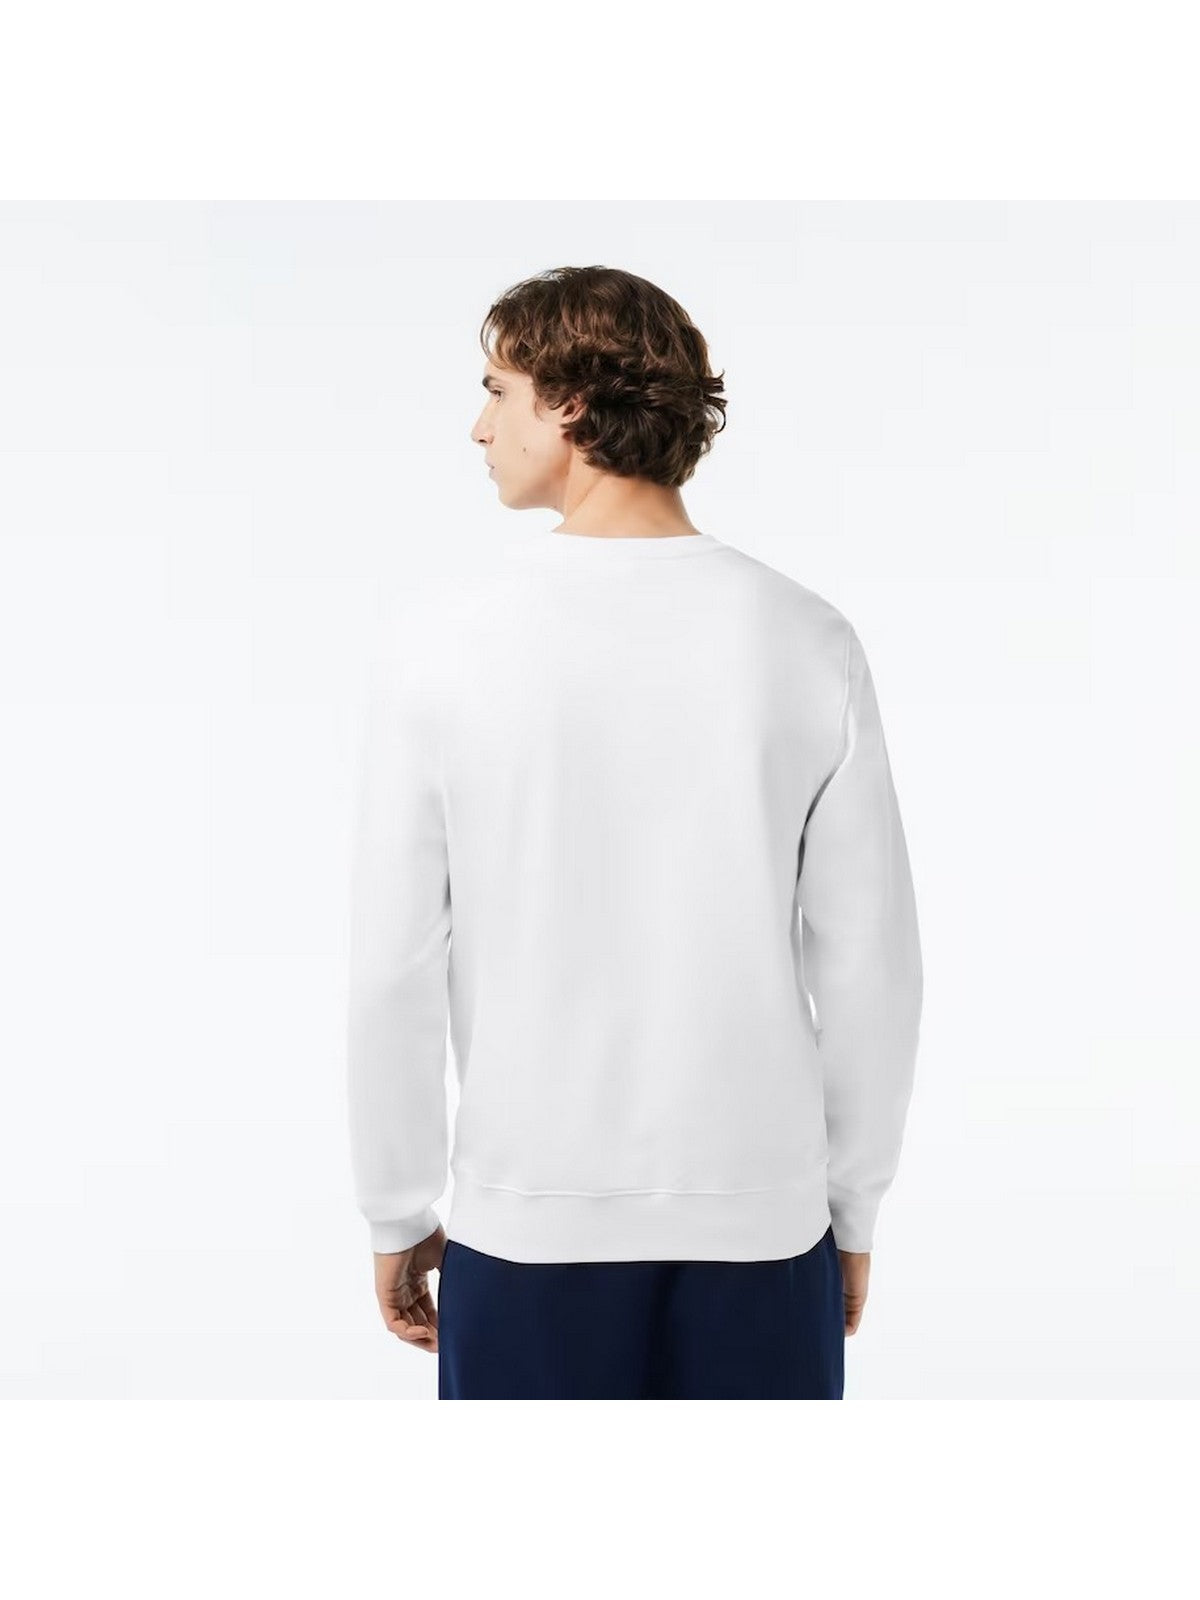 LACOSTE Hommes Sweatshirt SH1281 001 Blanc